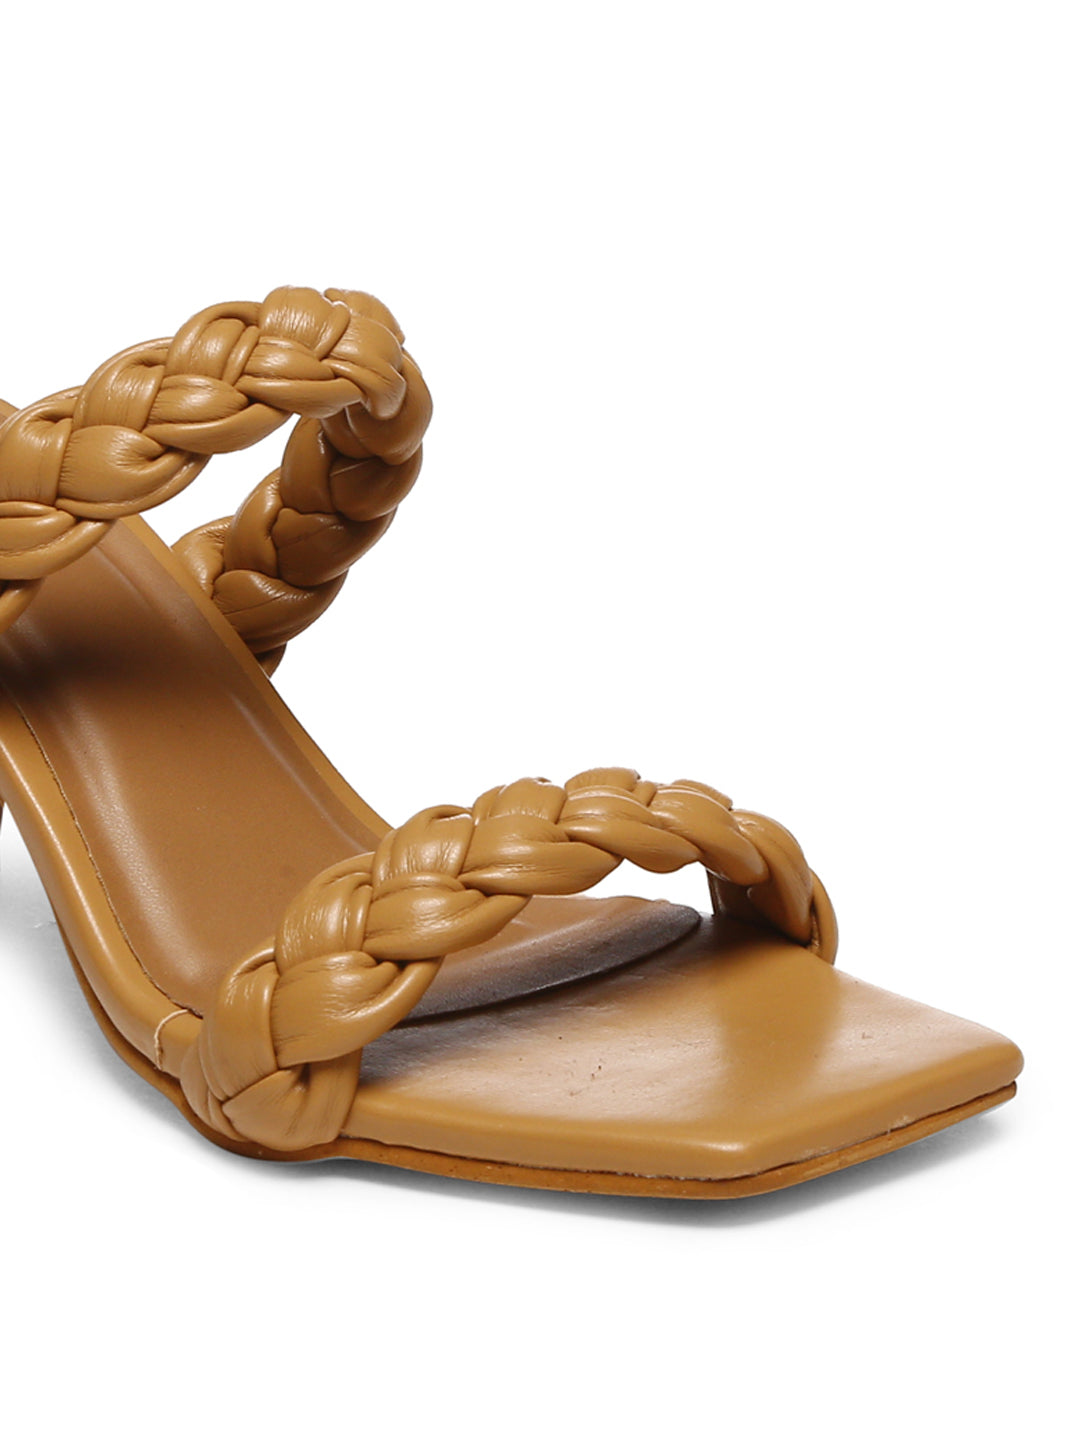 GNIST Tan Braided Block Heel Sandal